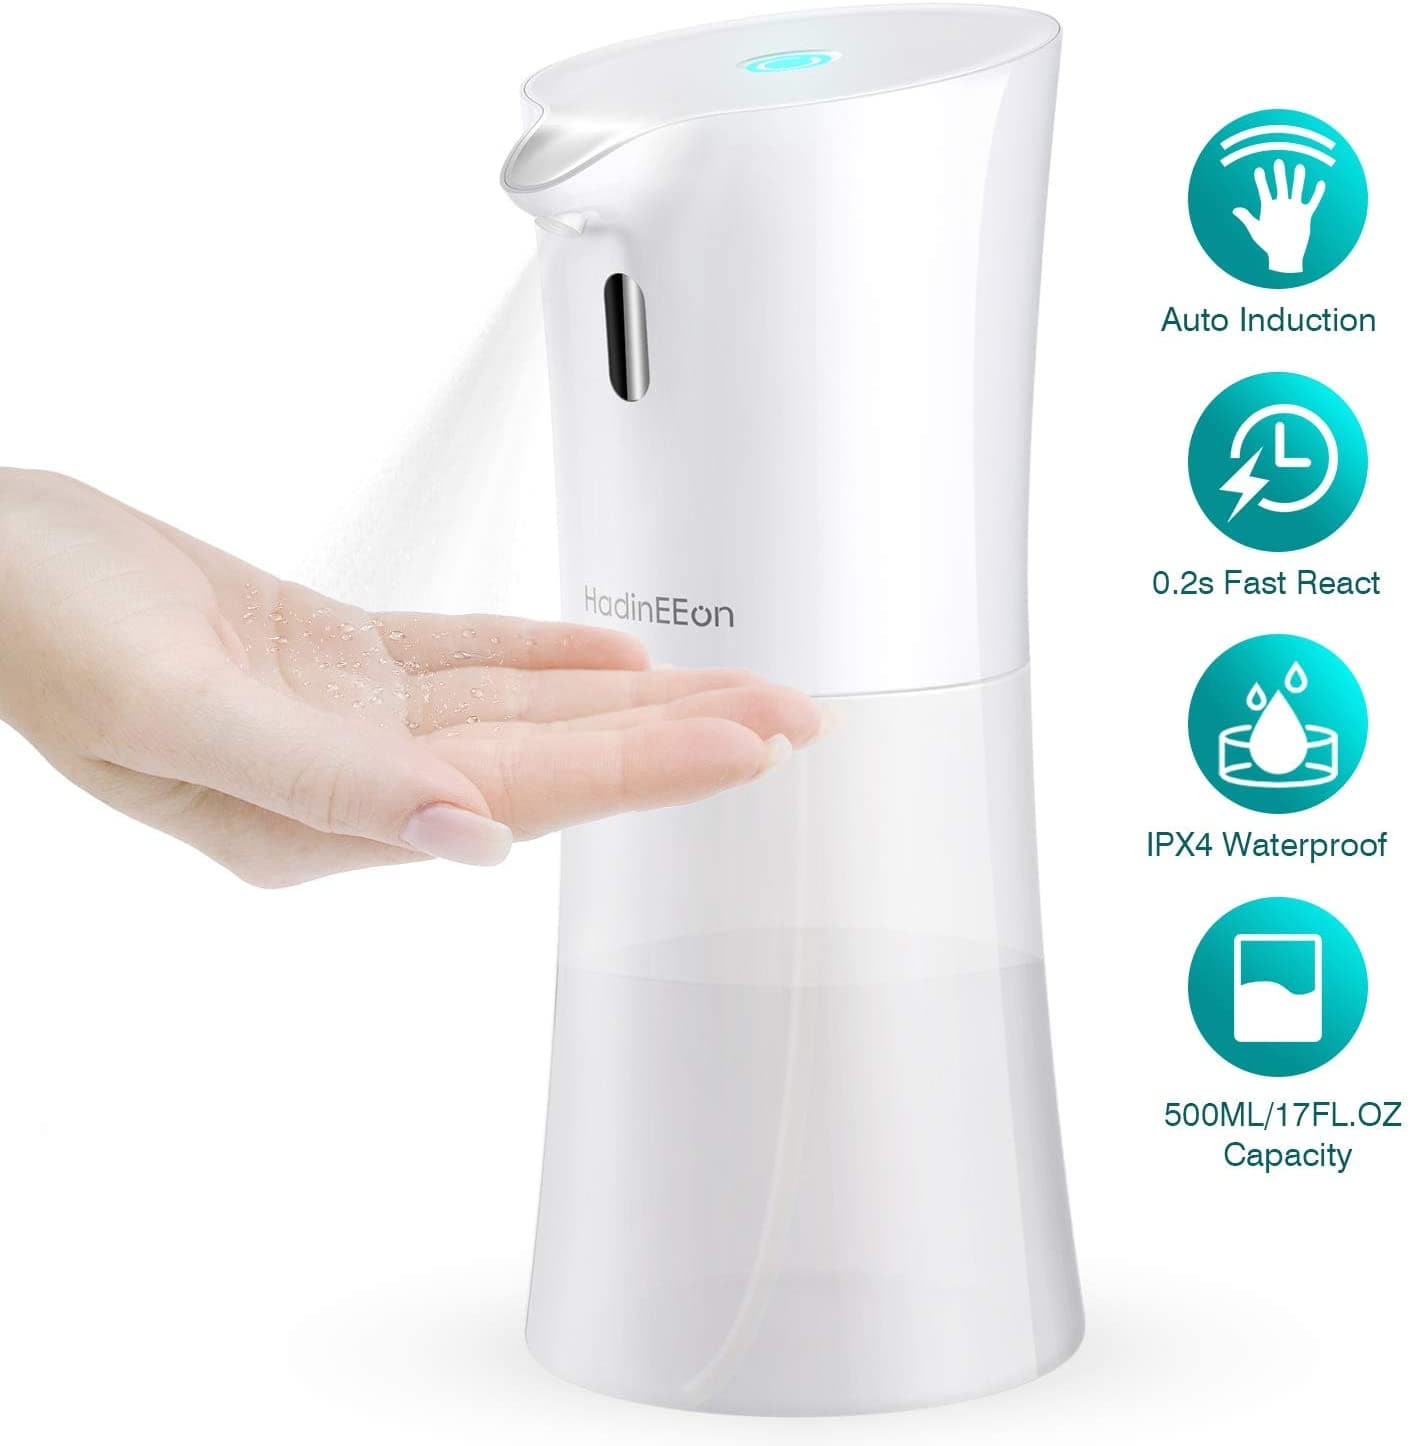 HadinEEon Automatic Hand Sanitizer IPX4 Waterproof